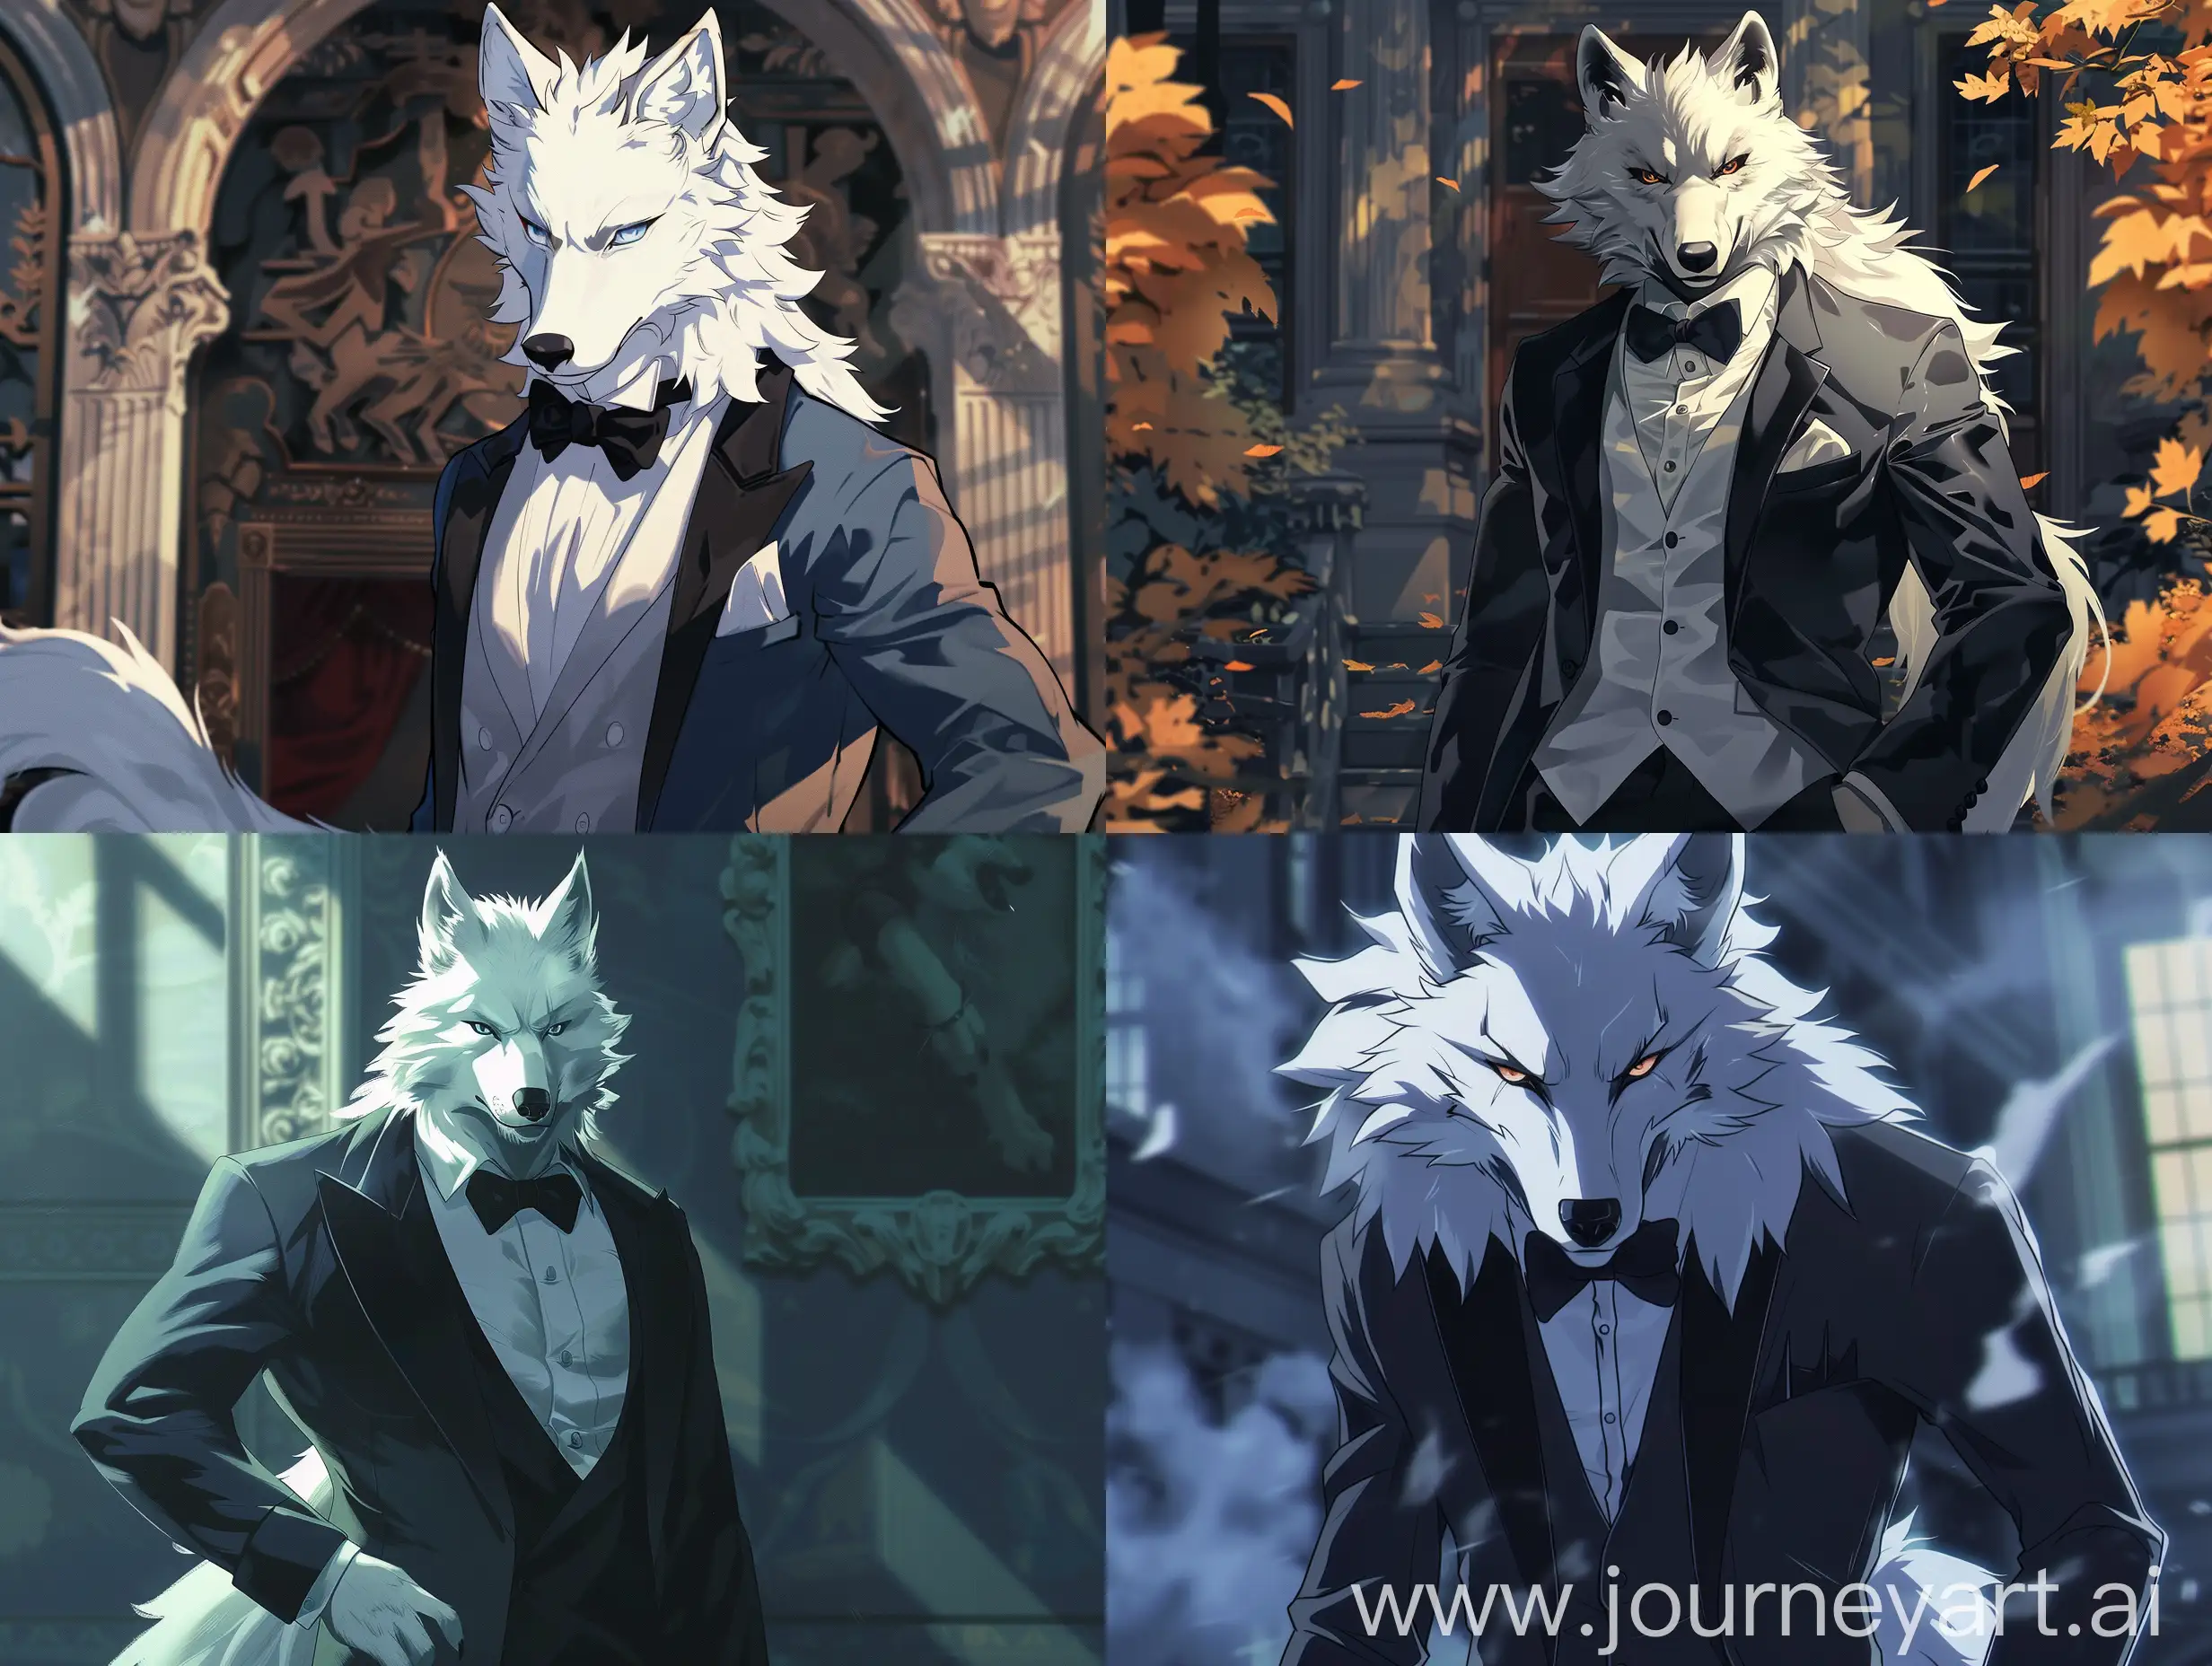 Anthropomorphic-White-Wolf-in-Formal-Tuxedo-Anime-Art